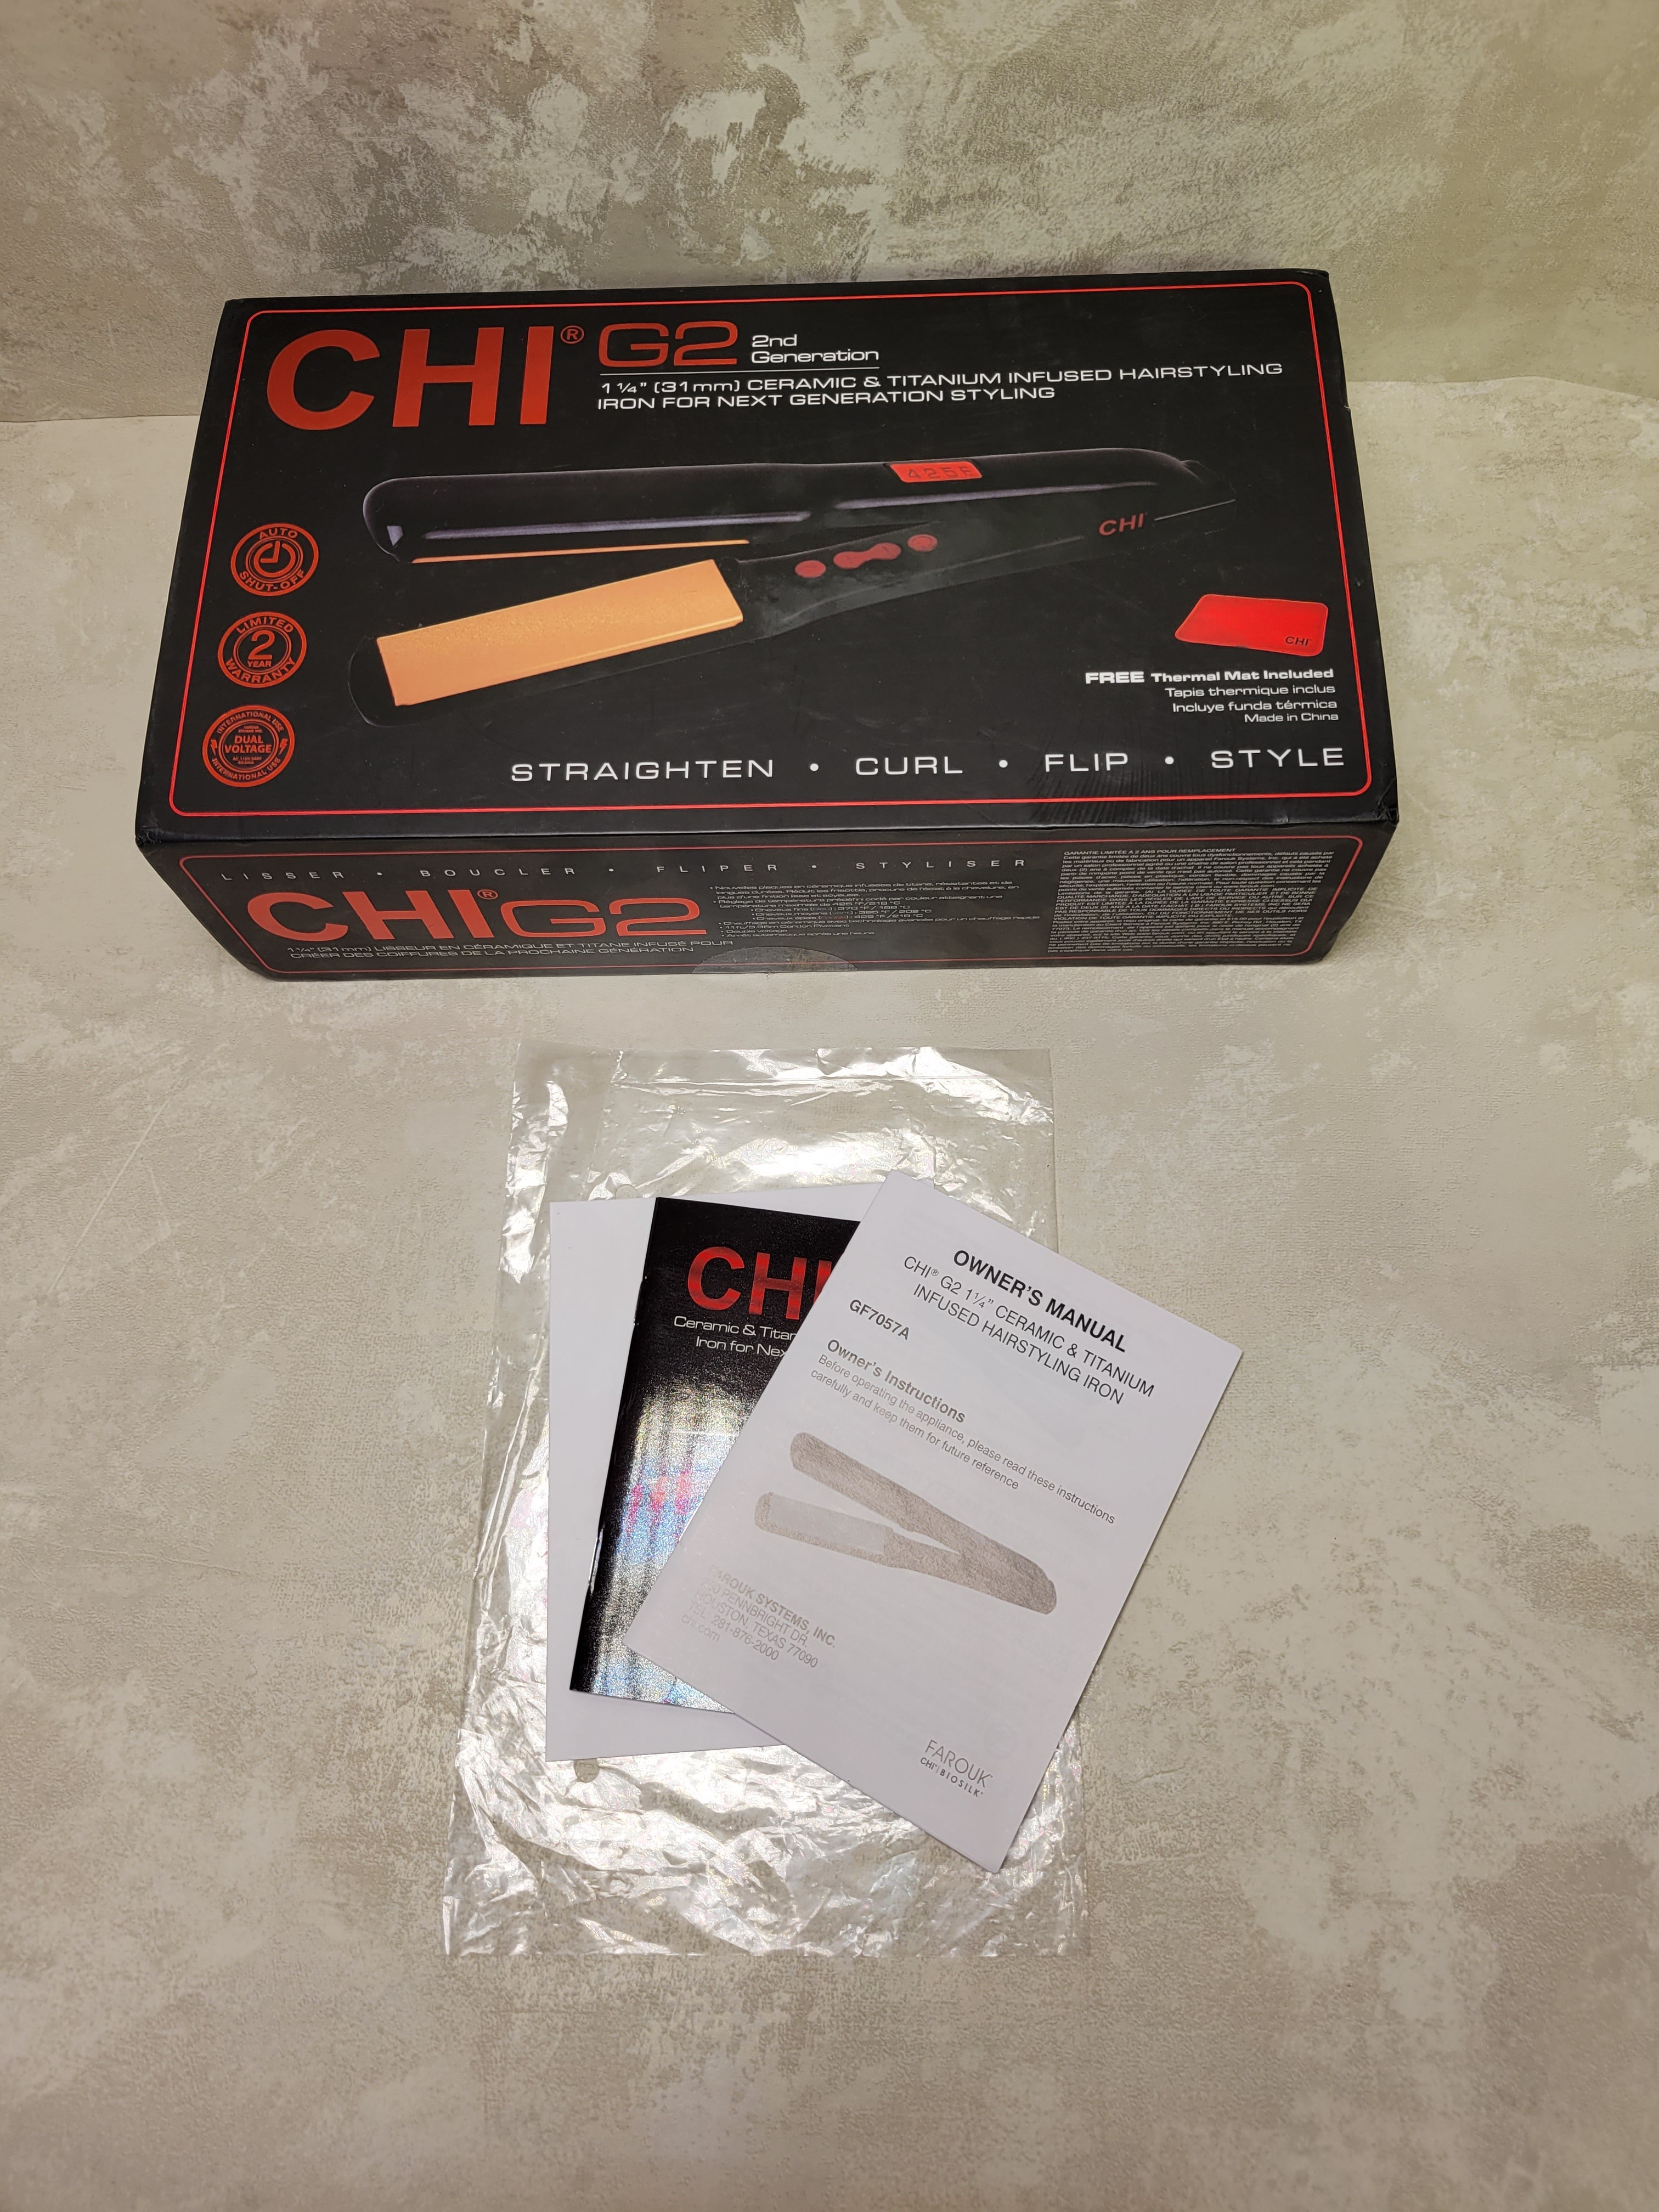 CHI G2 Professional Hair Straightener Flat Iron | 1 1/4